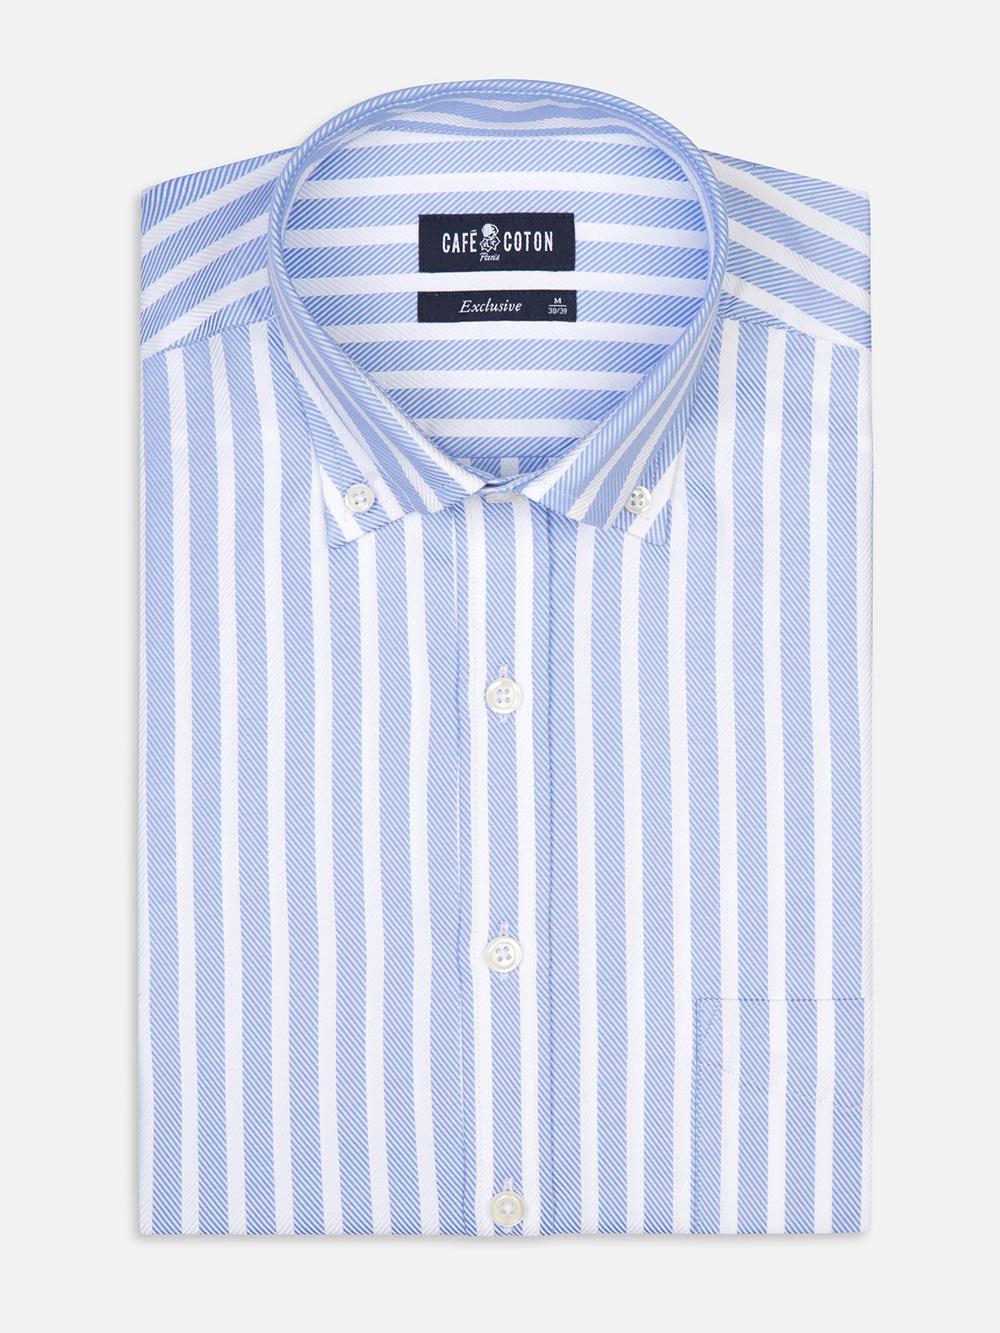 Don sky blue striped shirt - Button-down collar